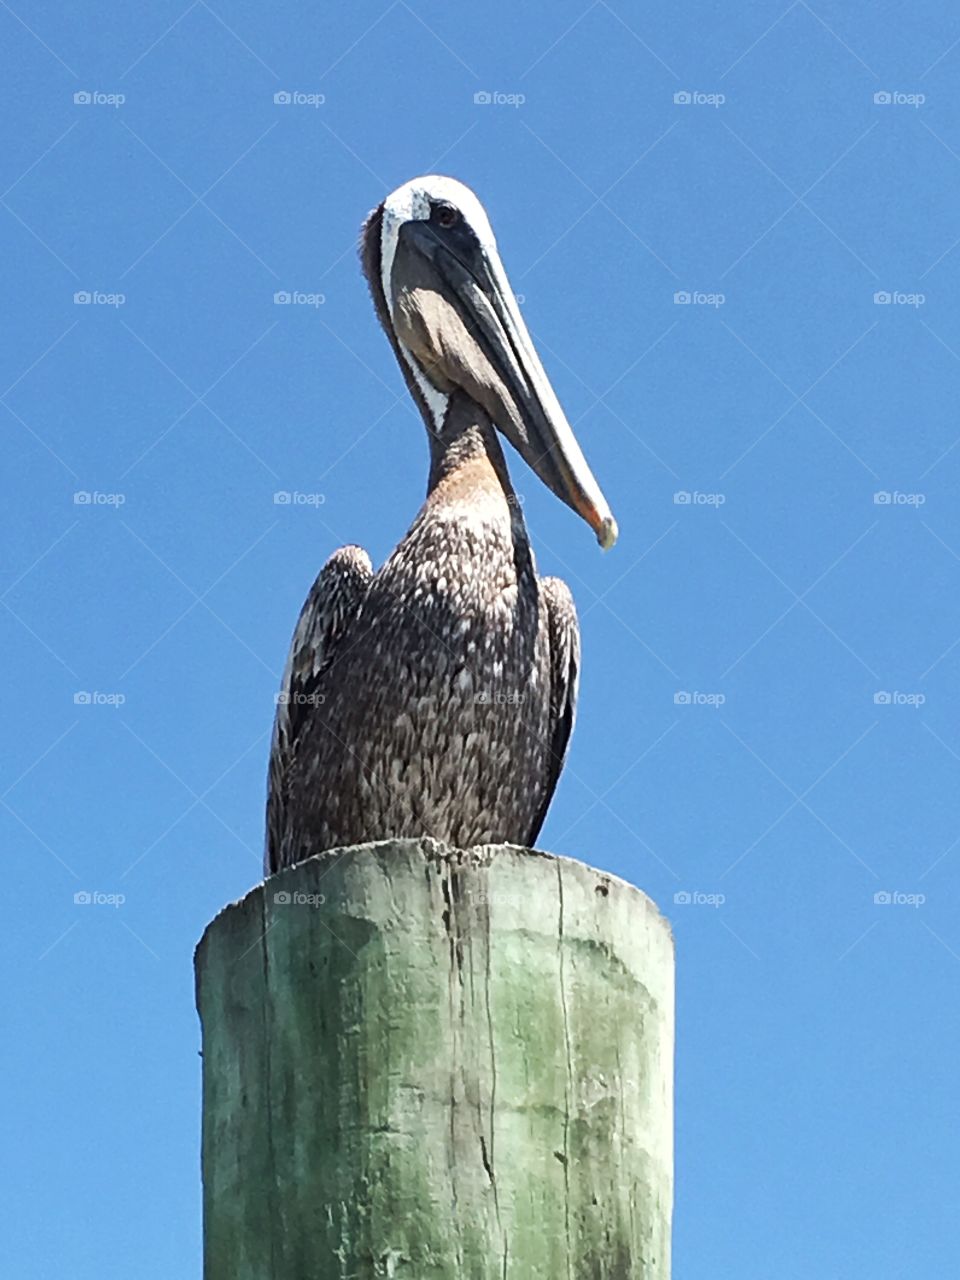 Pelican on post in Port Aransas, Texas. 